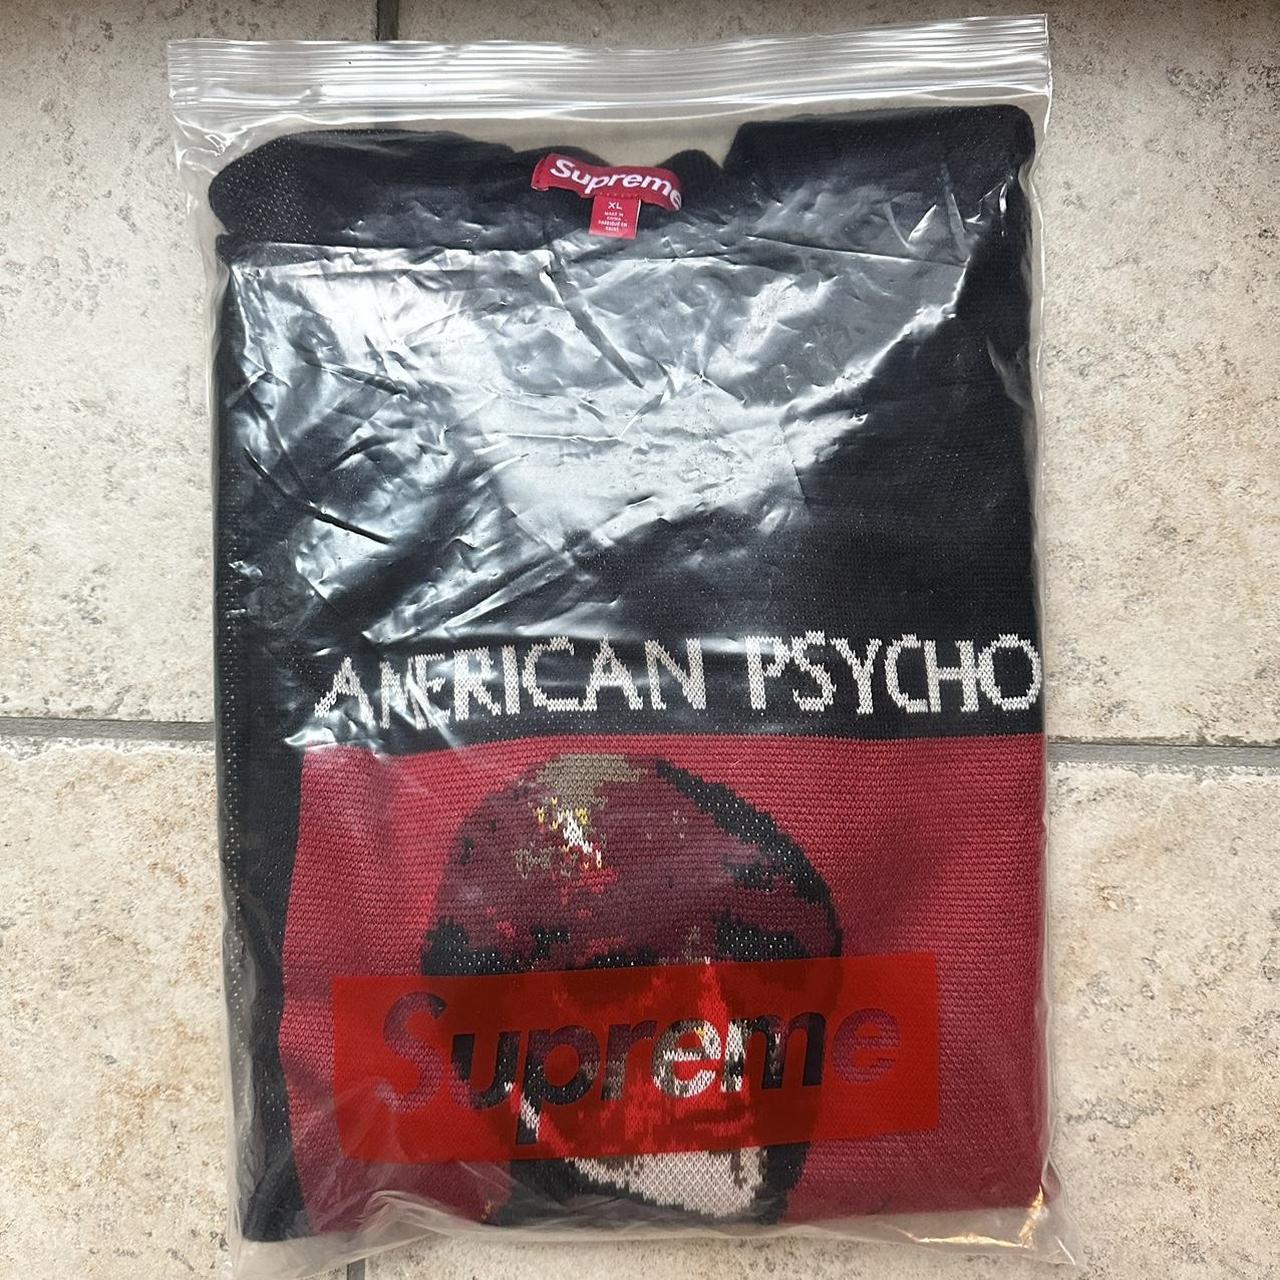 Supreme American Psycho Sweater Black XL